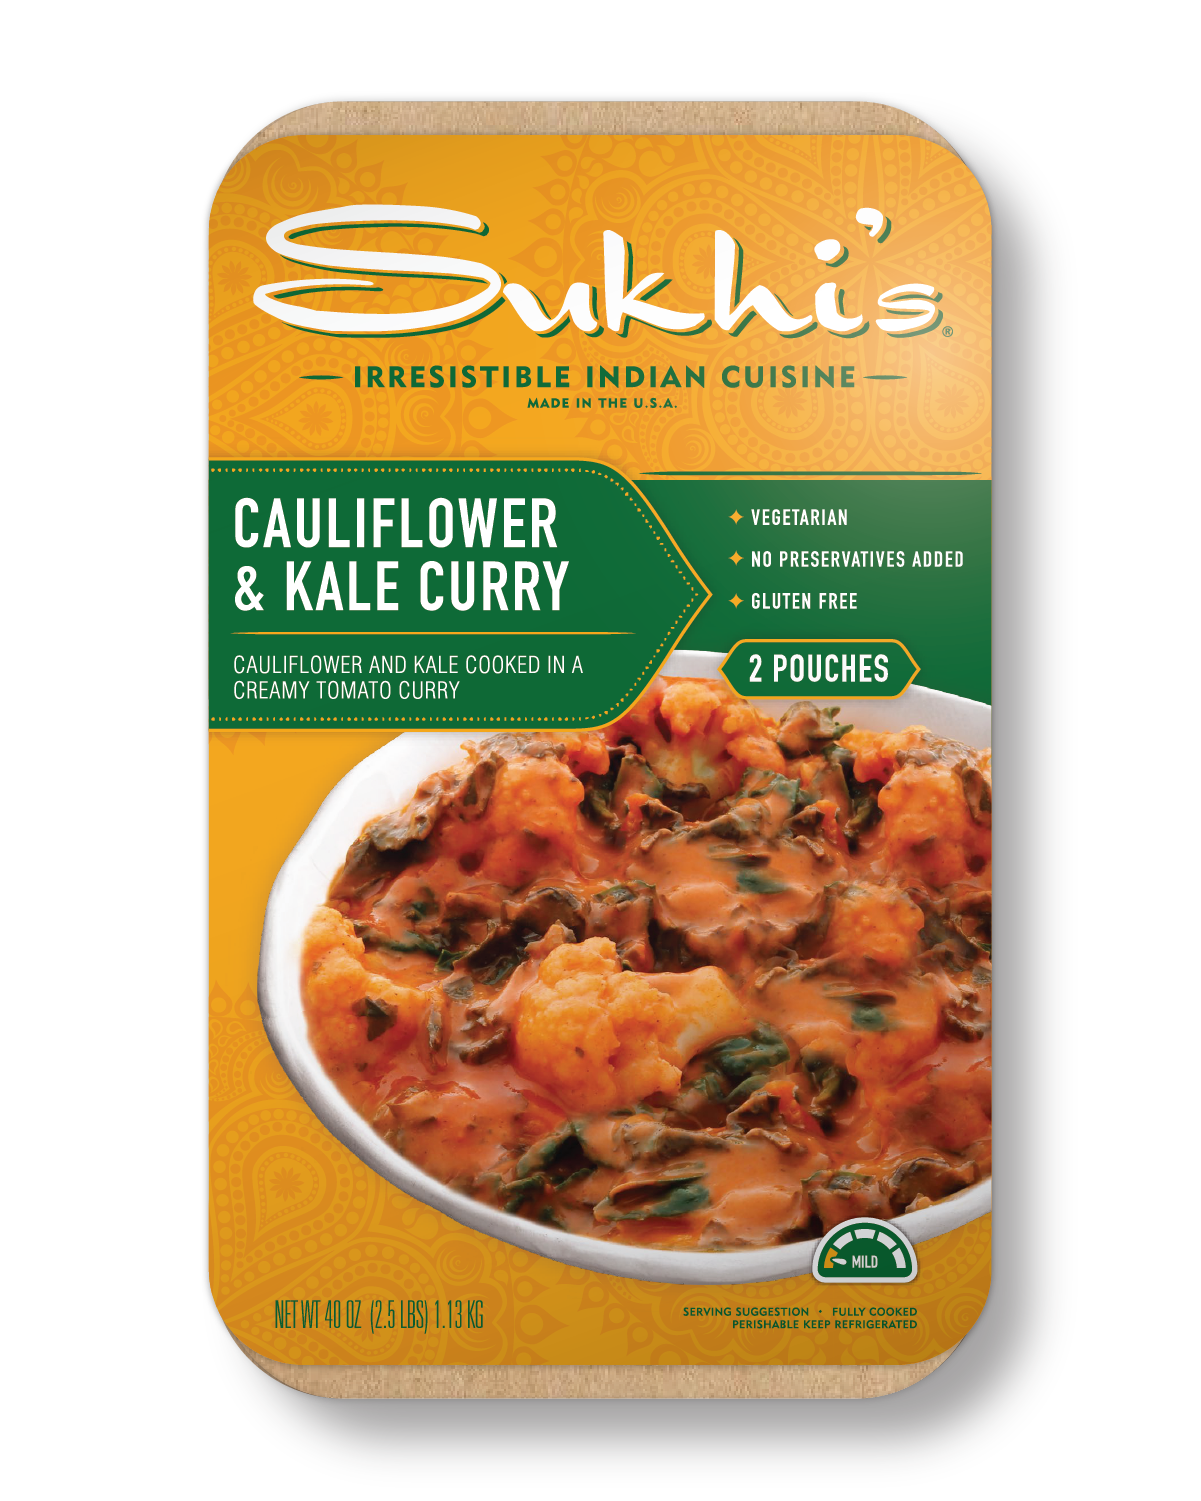 Cauliflower & Kale Curry - Family Size